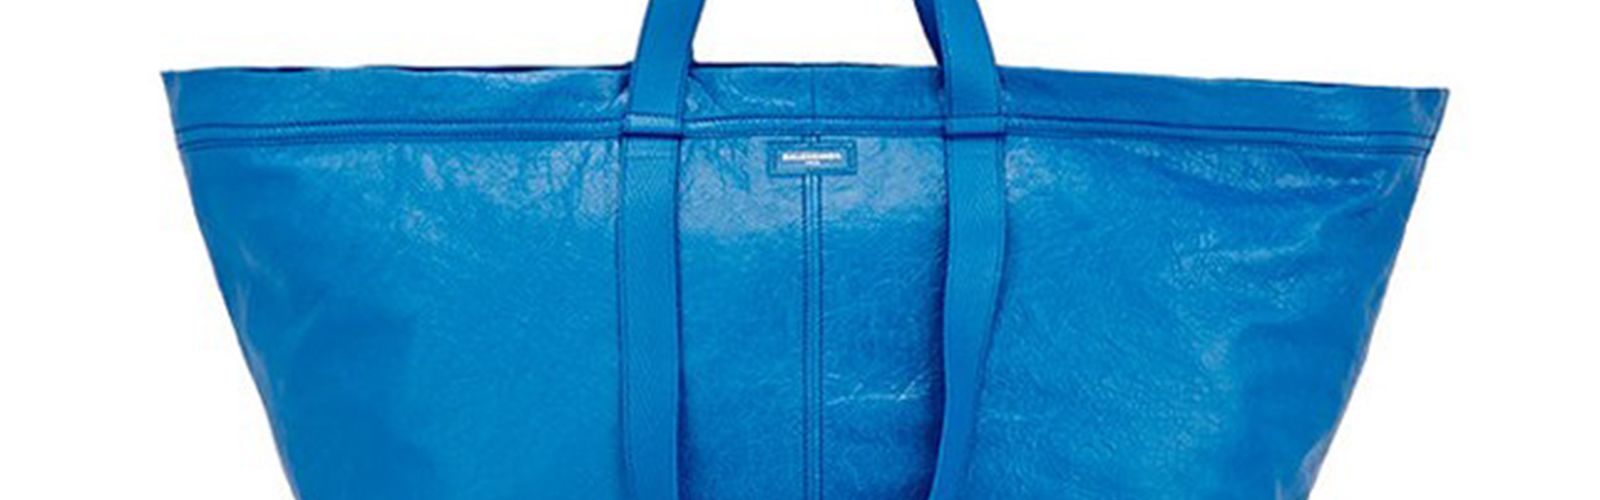 kolbøtte Caius Grunde The Balenciaga Ikea-esque bag story isn't new | CNN